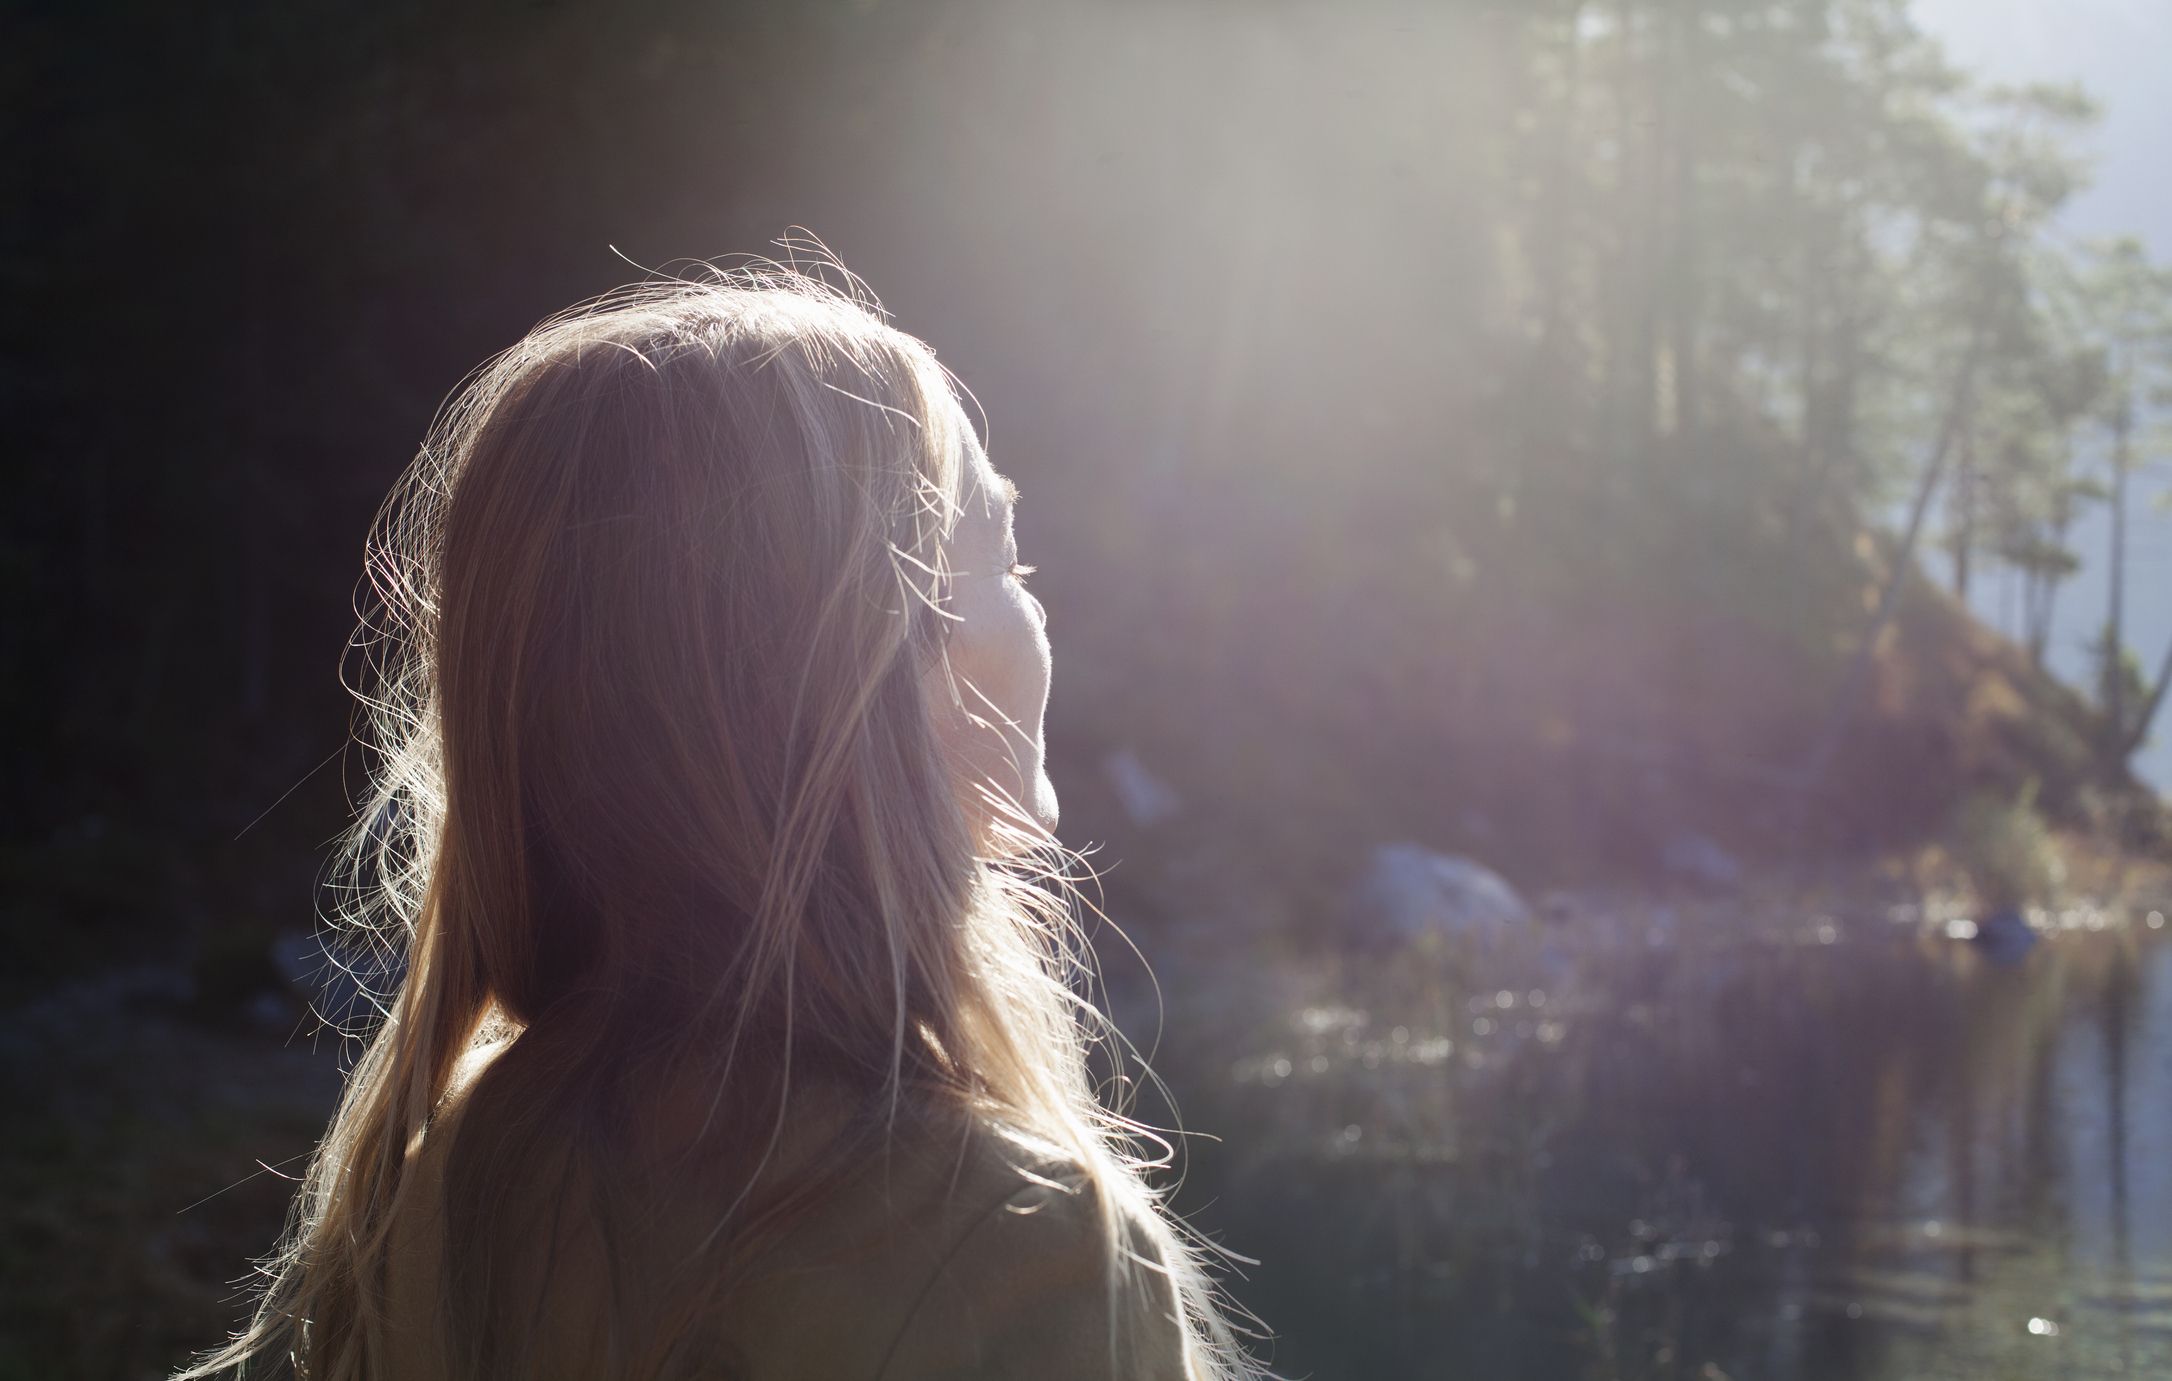 Person facing away looking towards a sunlit natural scene, hair visible